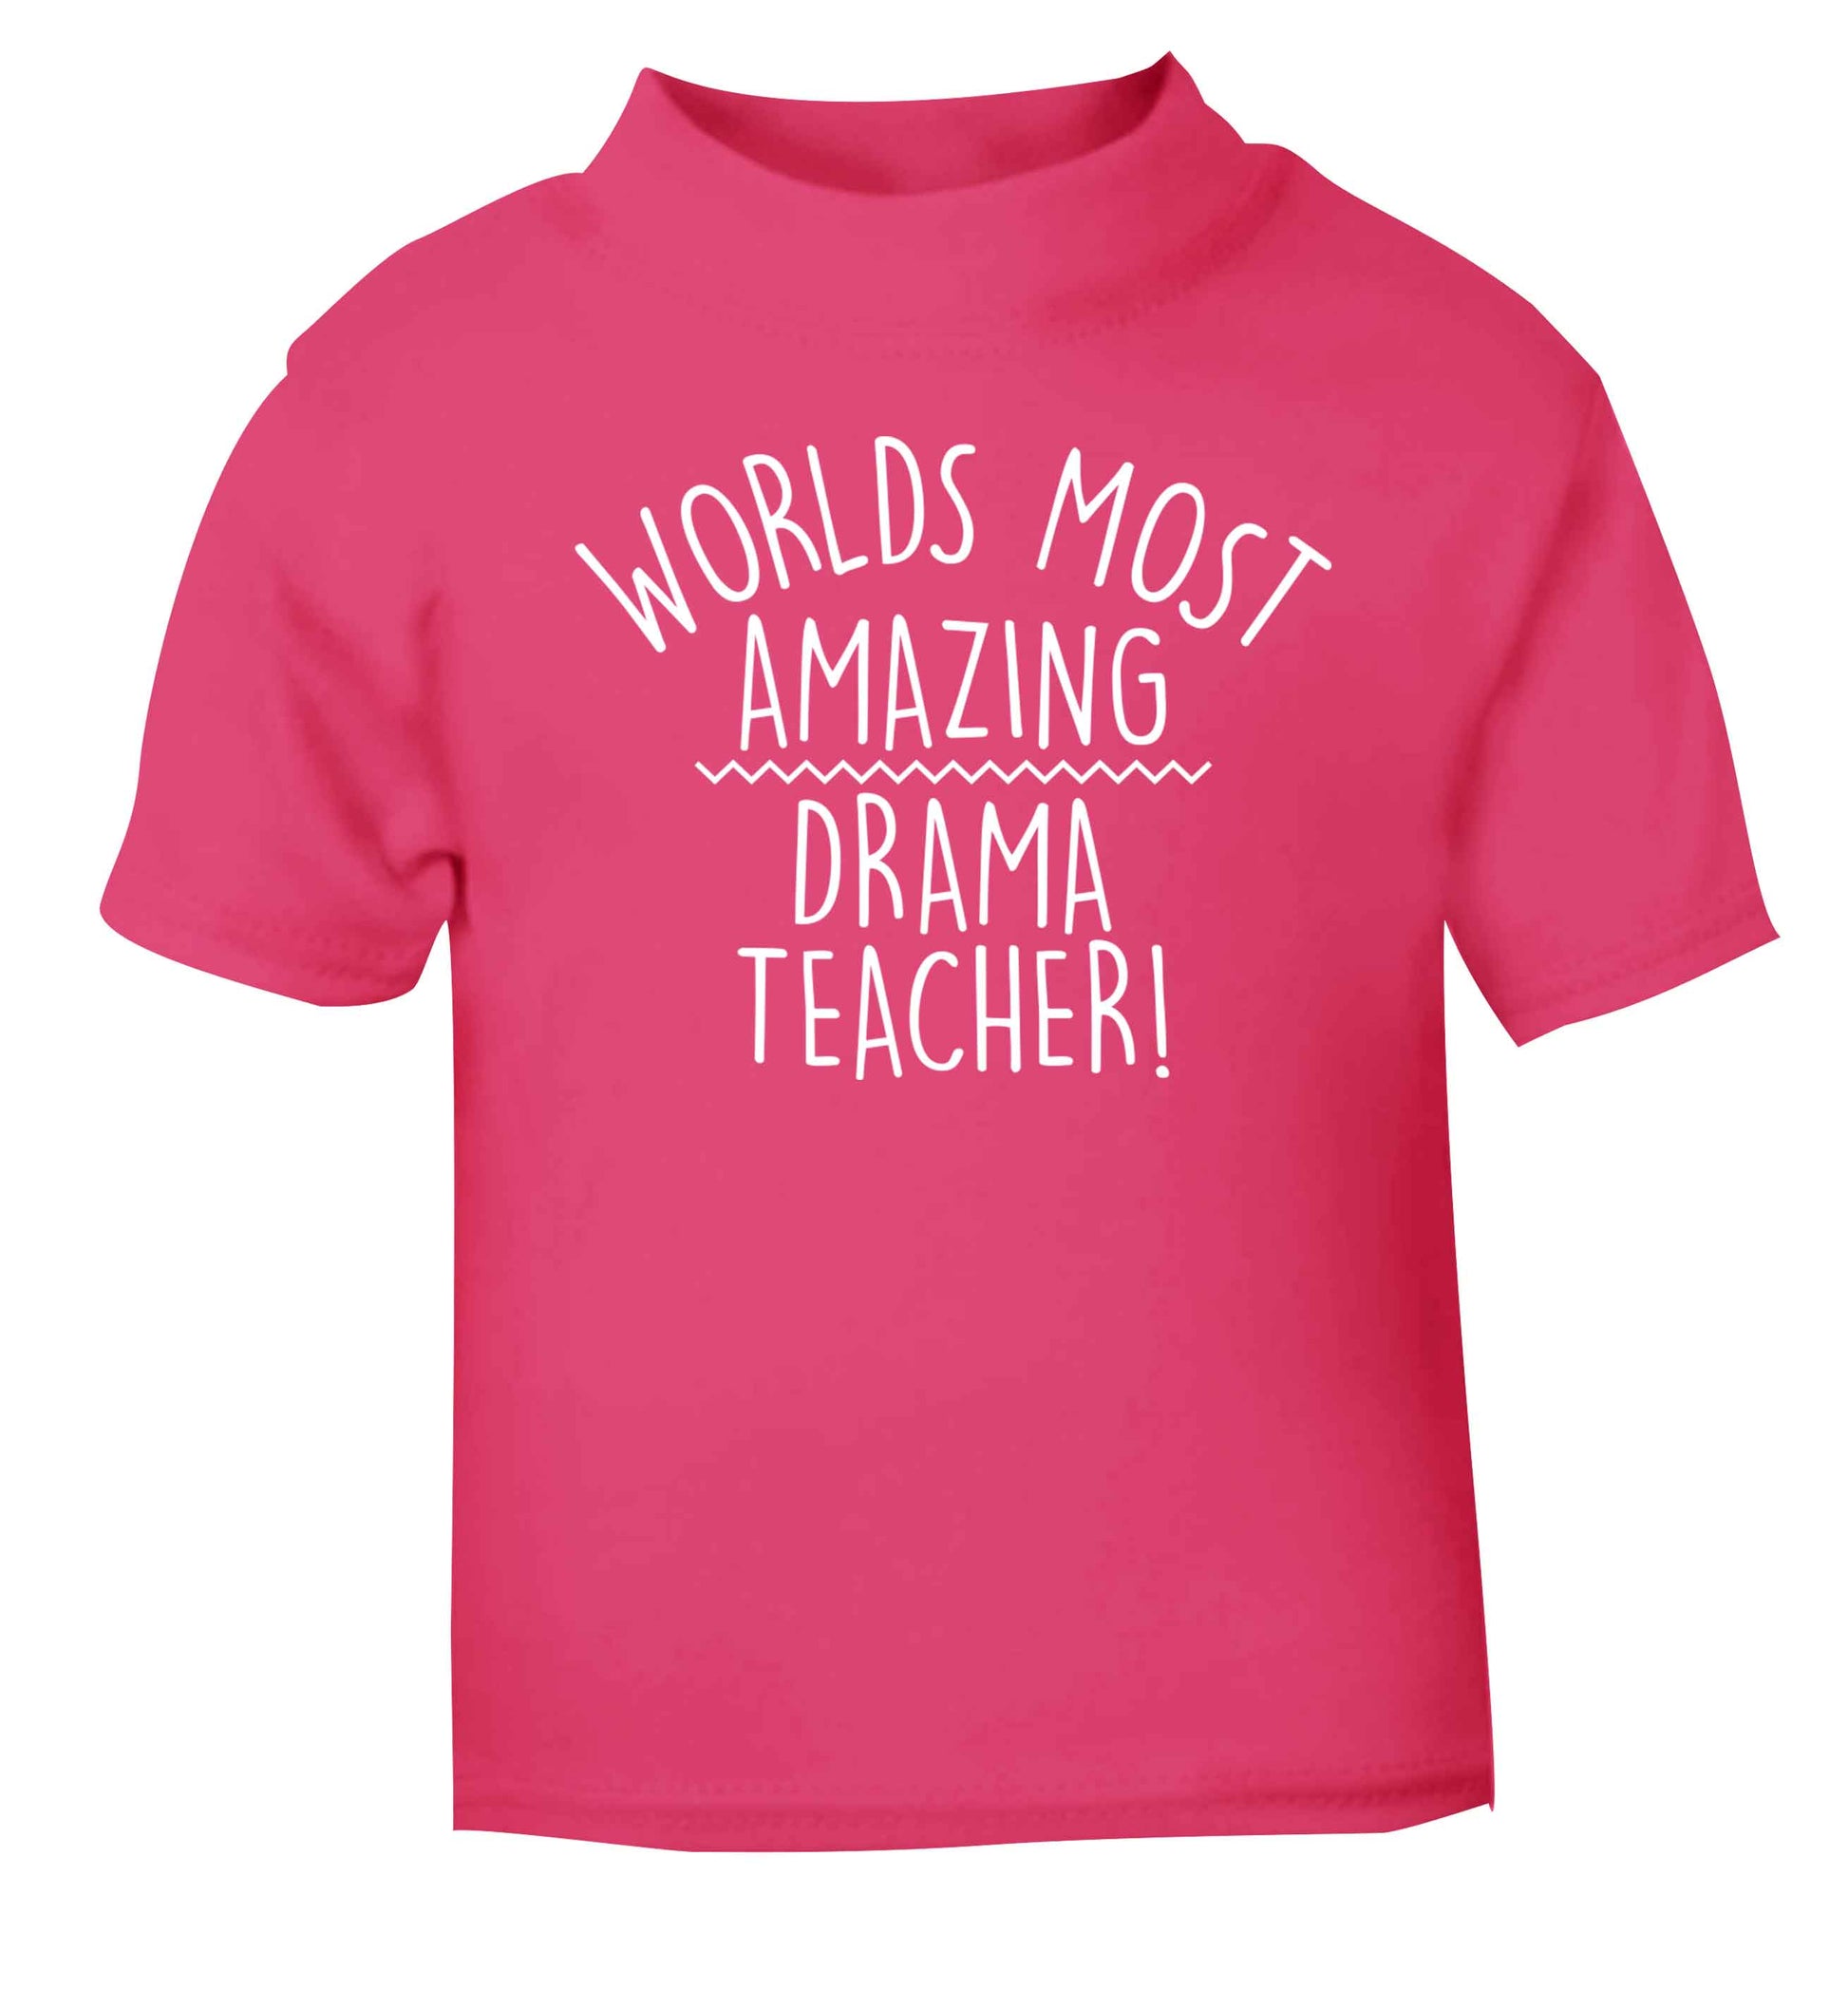 Worlds most amazing drama teacher pink baby toddler Tshirt 2 Years